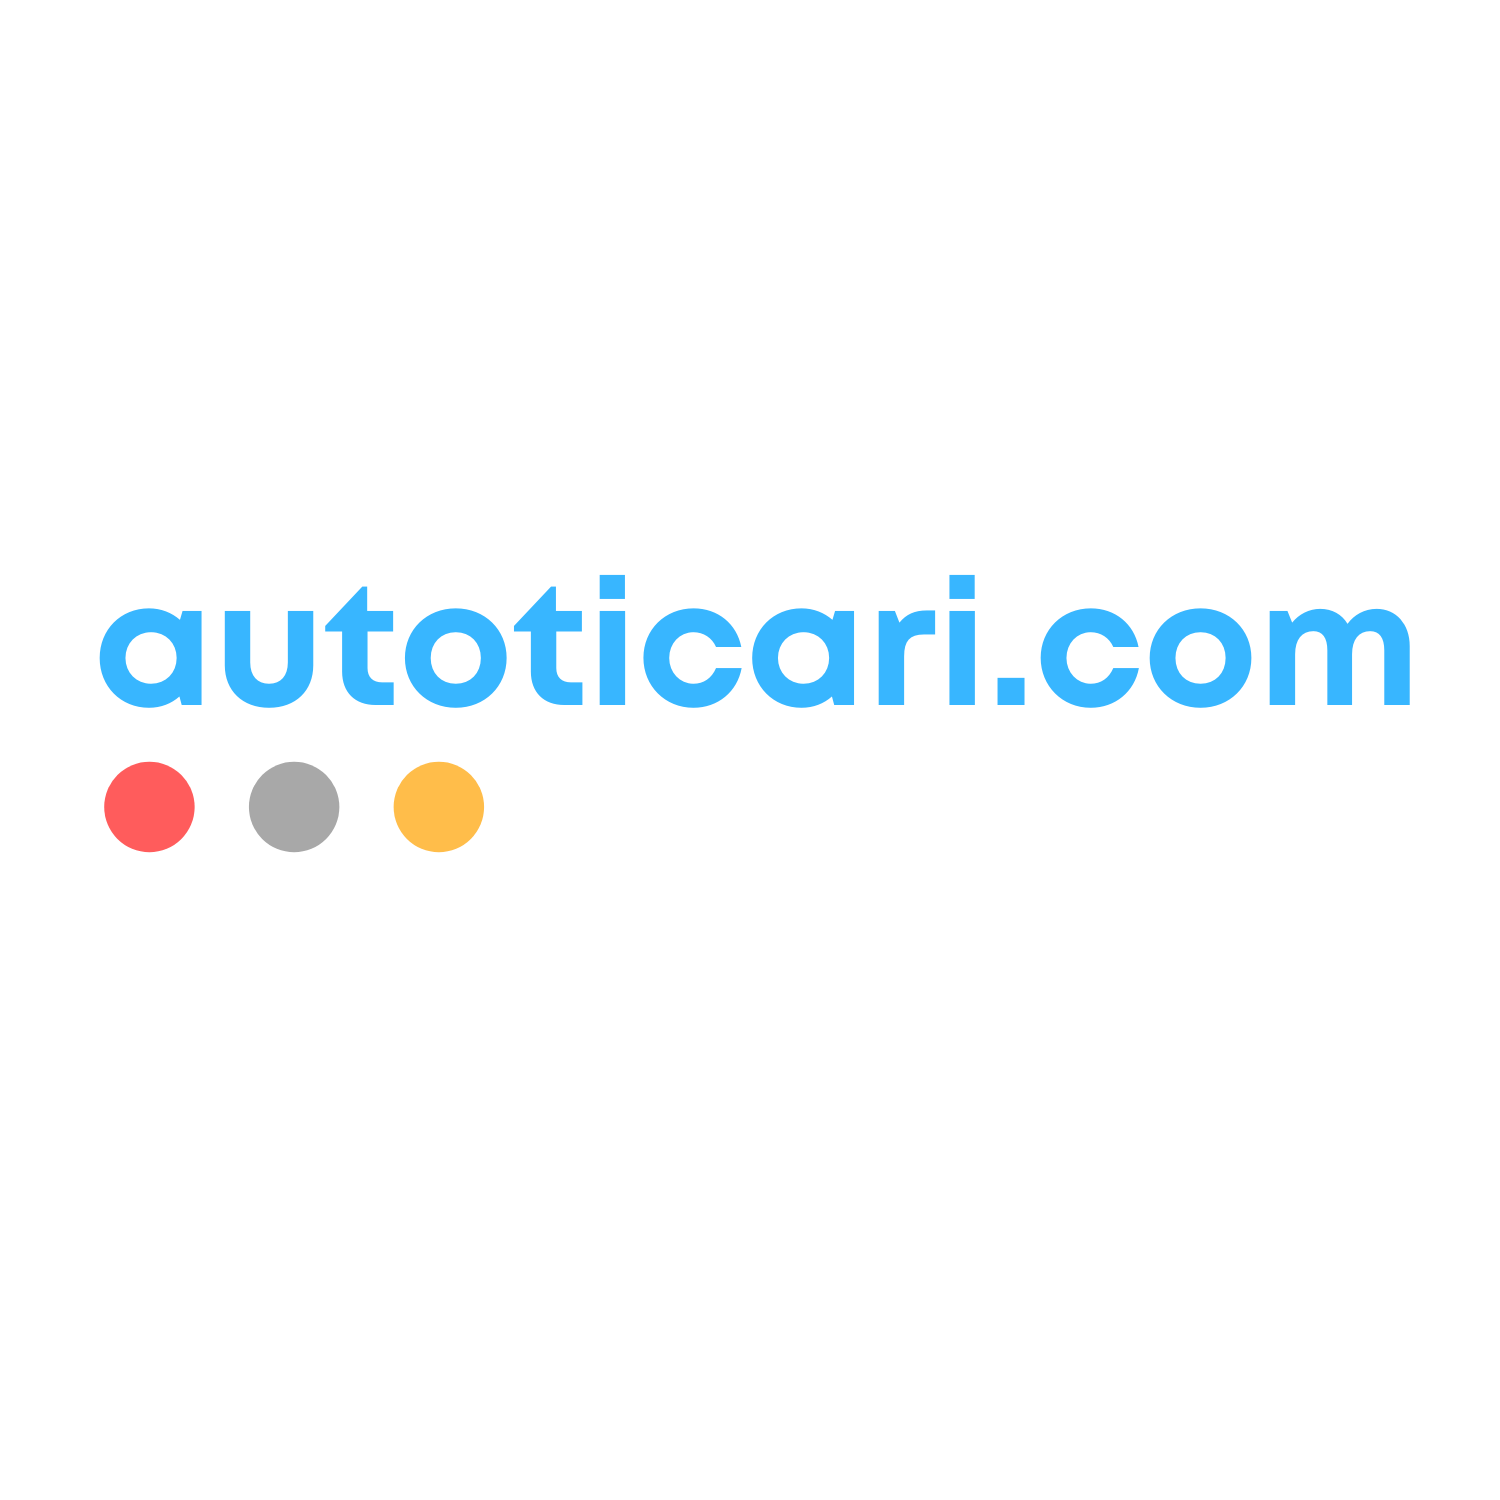 Autoticari.com